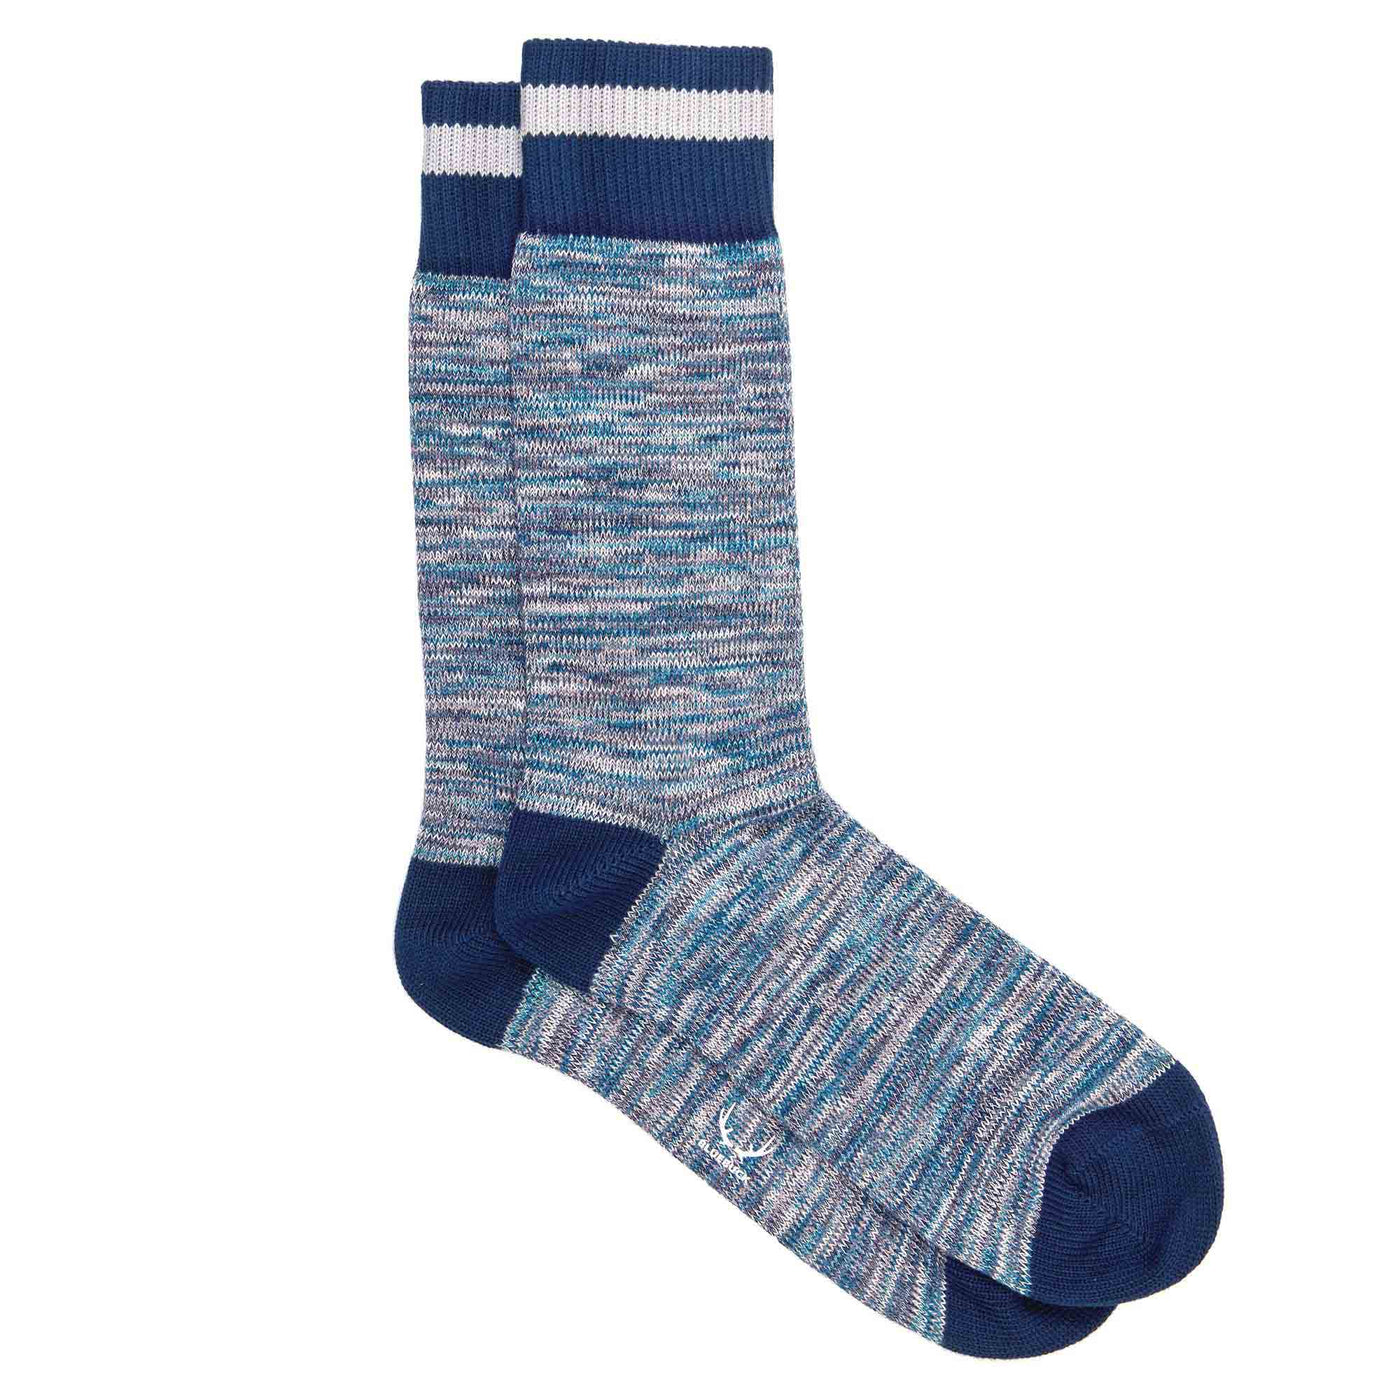 Blue and grey organic cotton men's socks